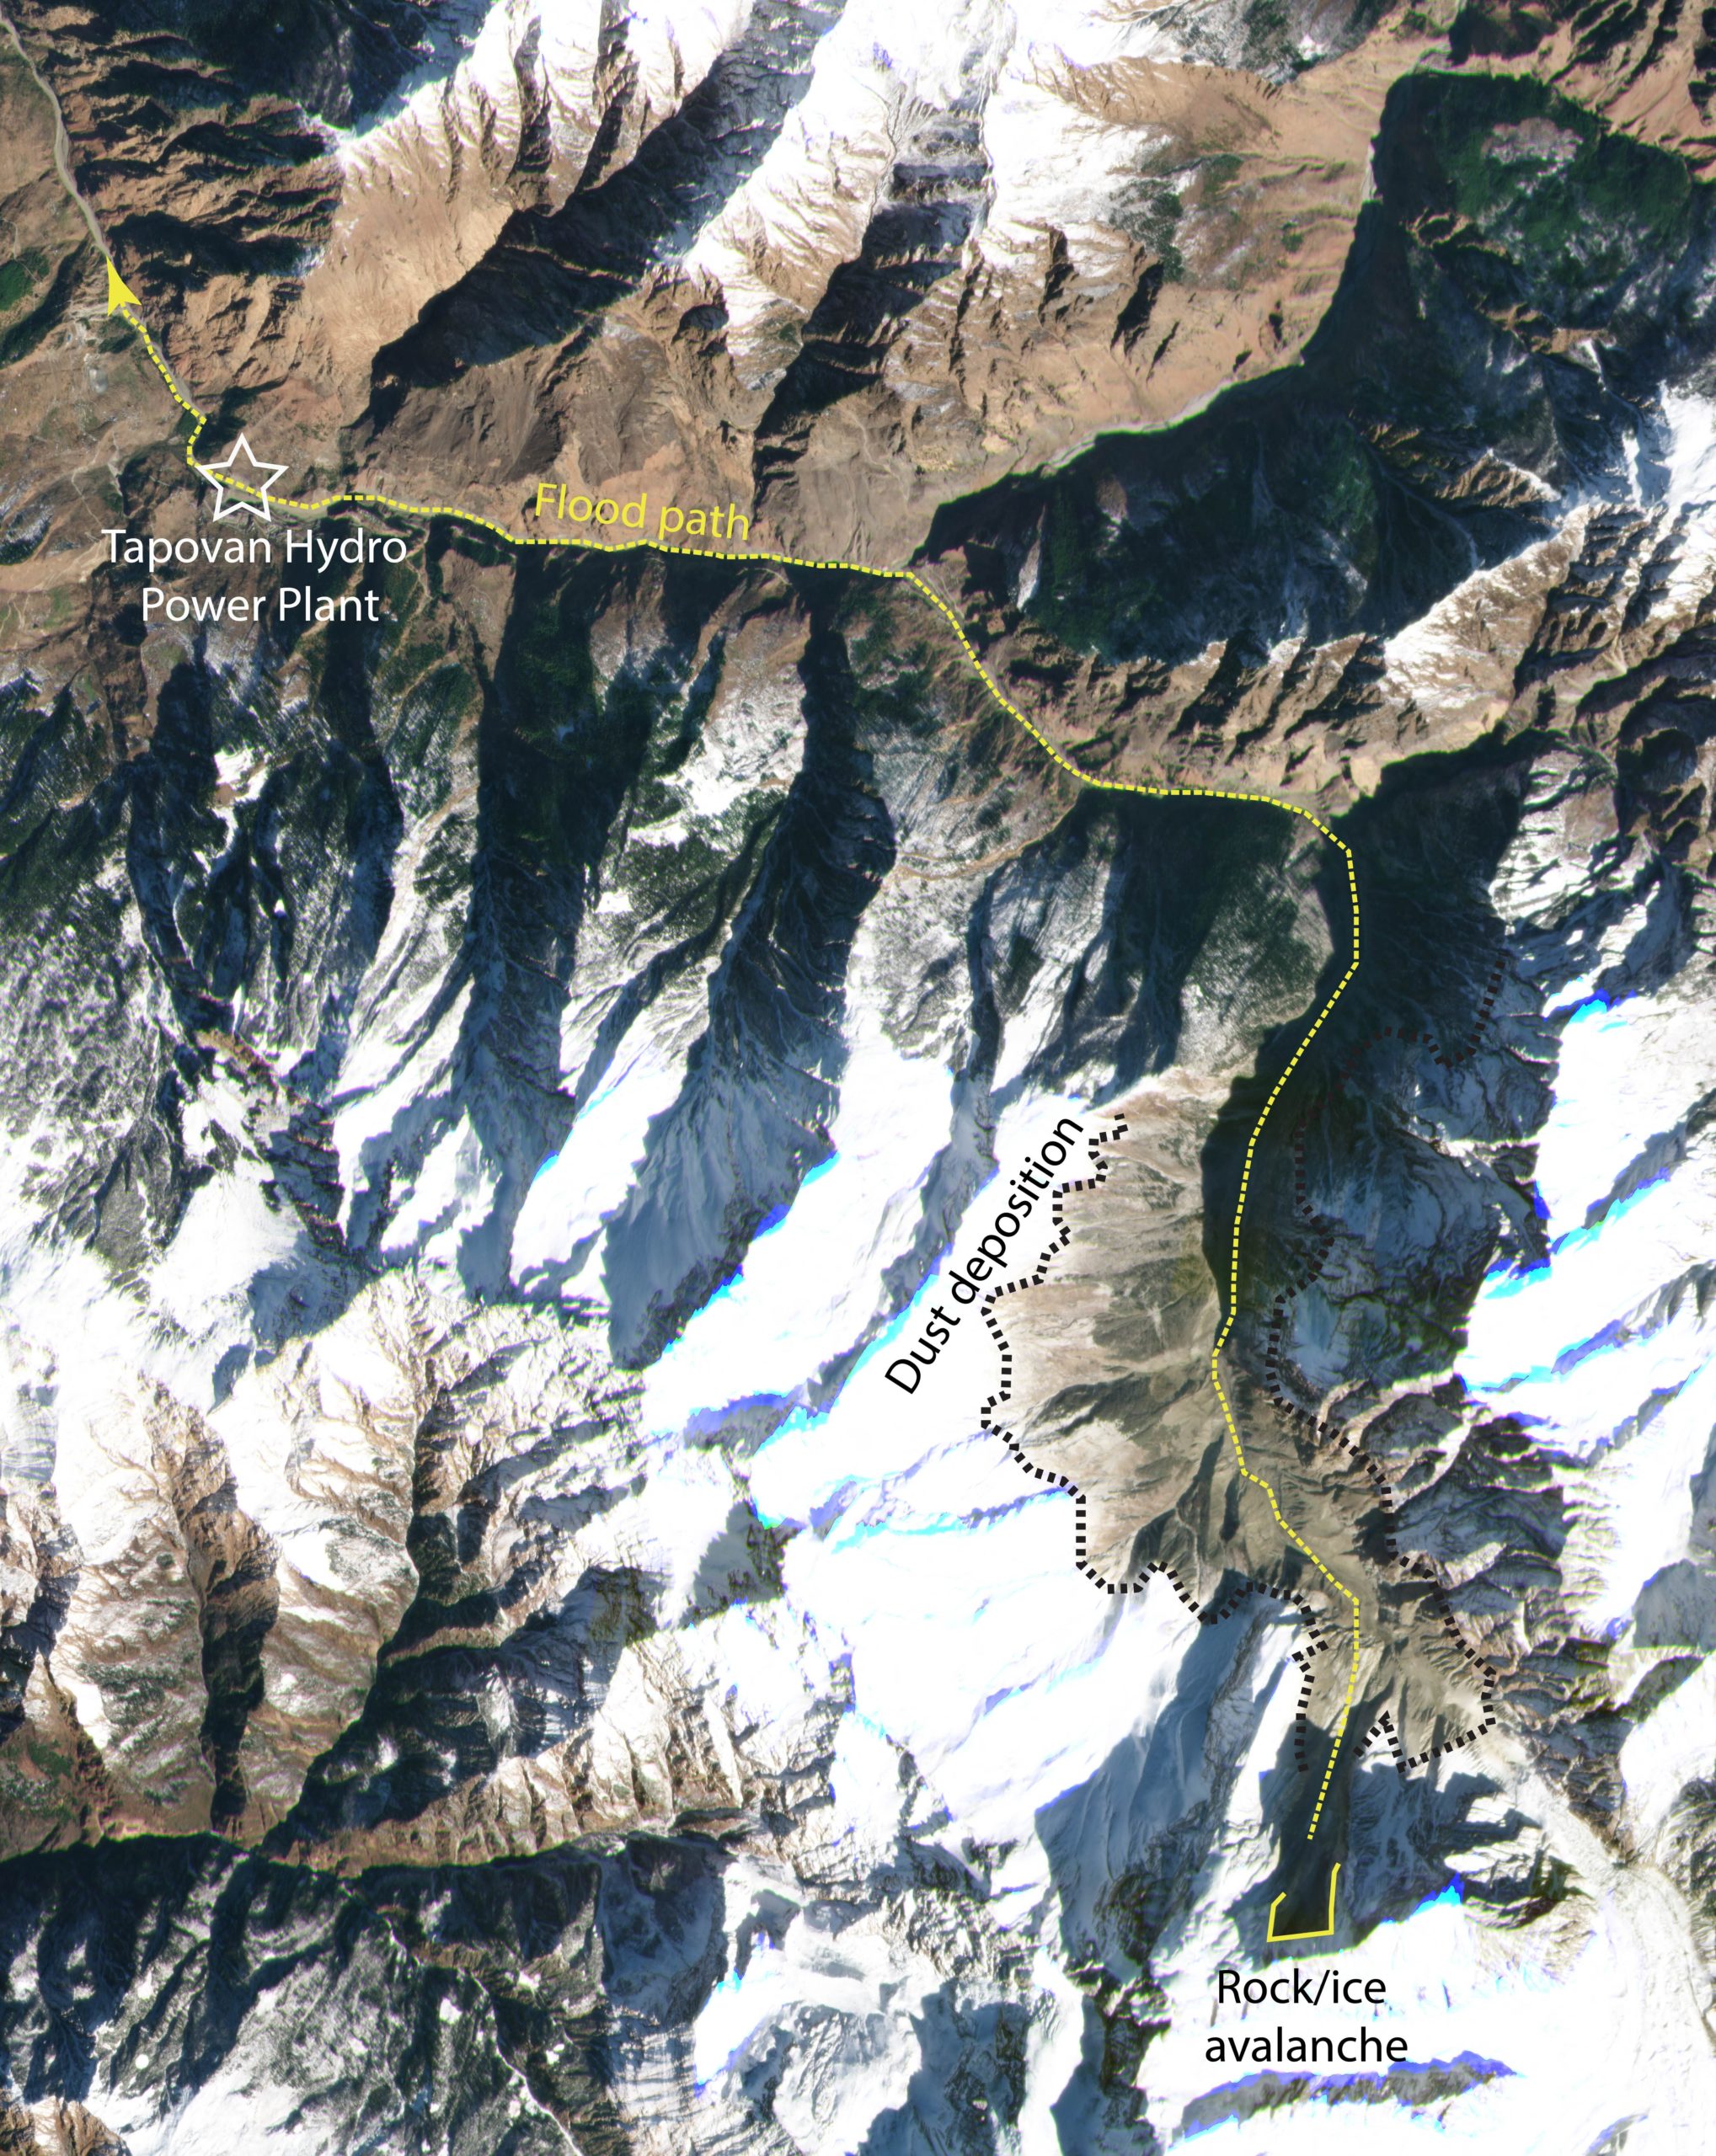 The track of the Chamoli landslide and debris flow